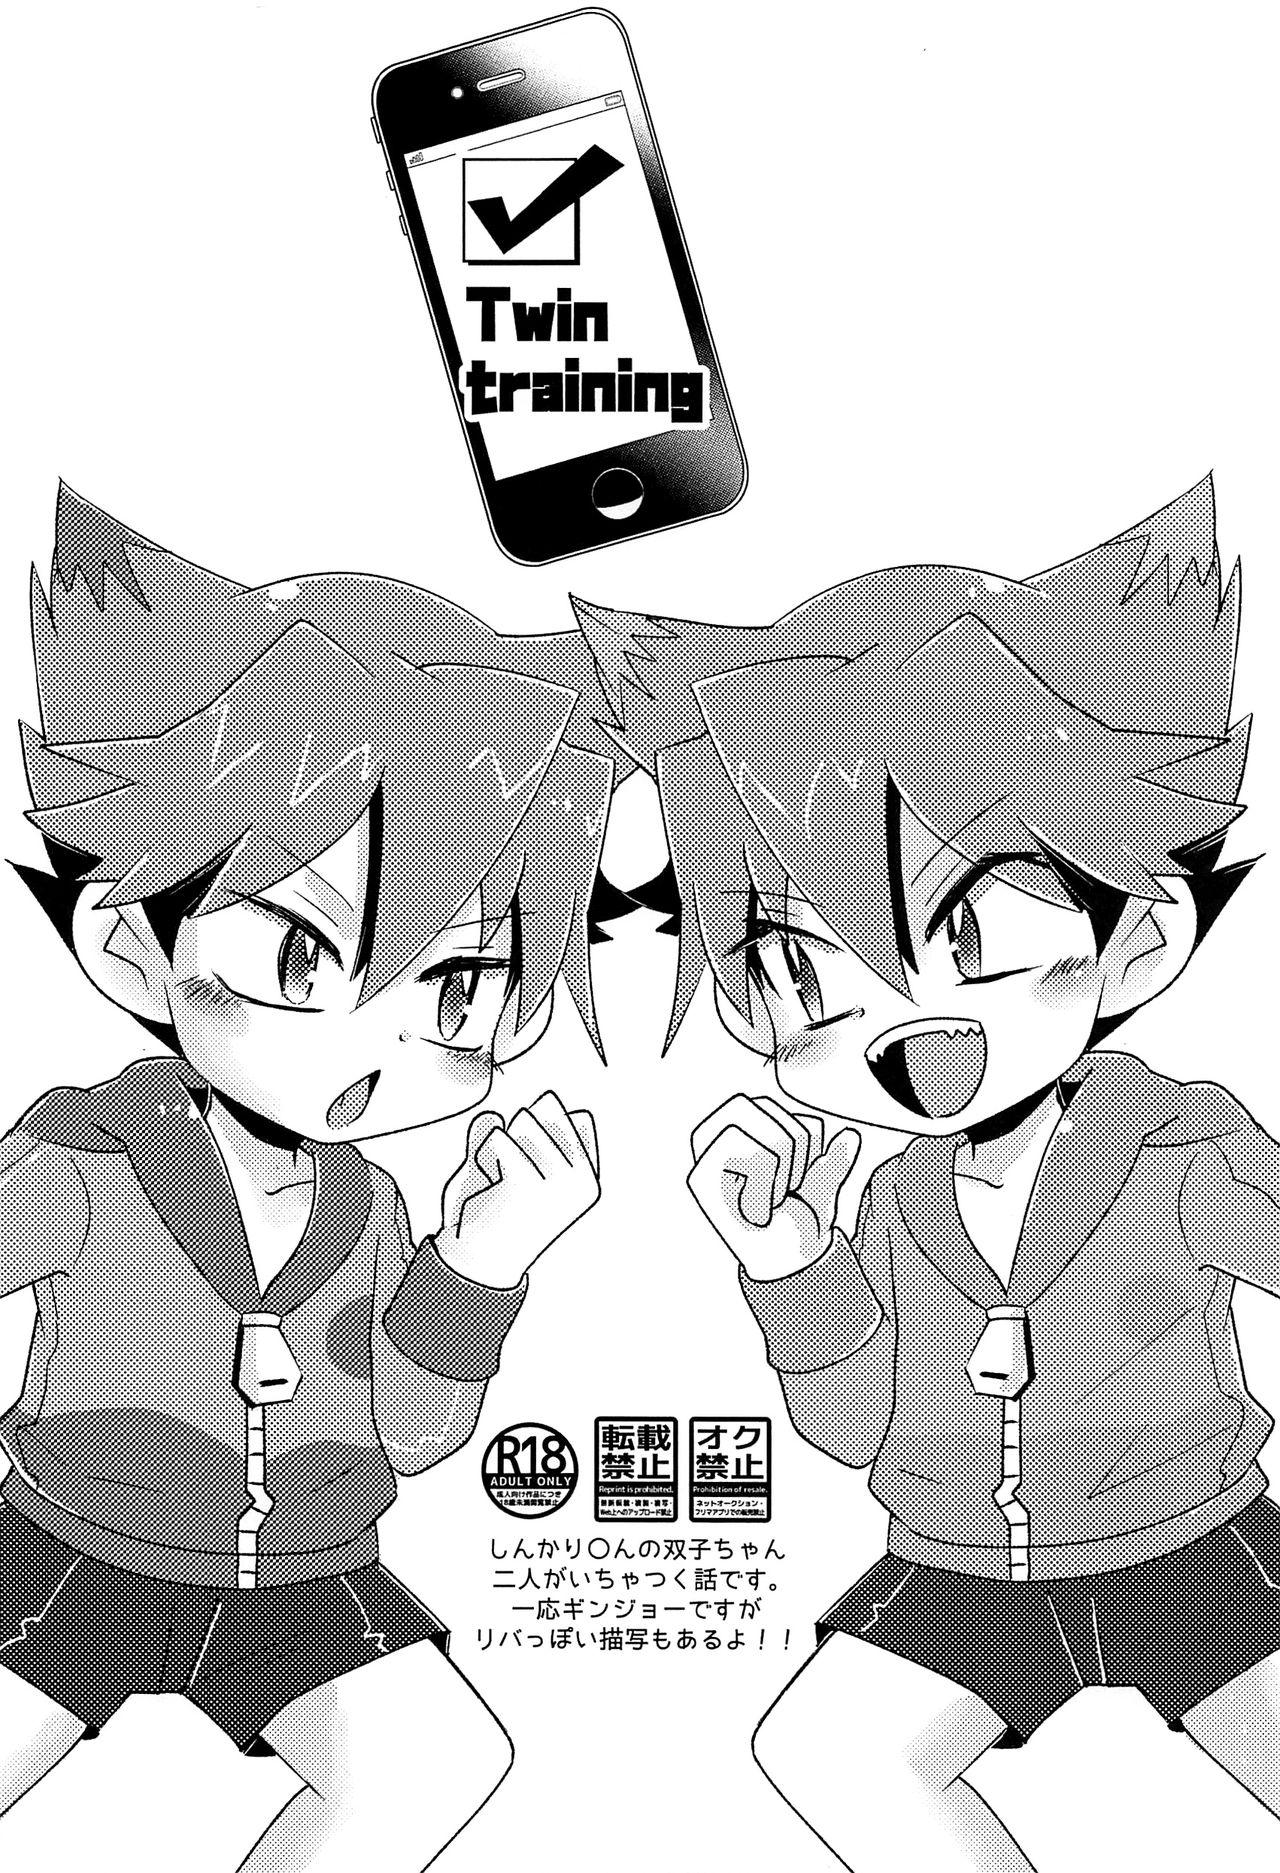 Twin training 5